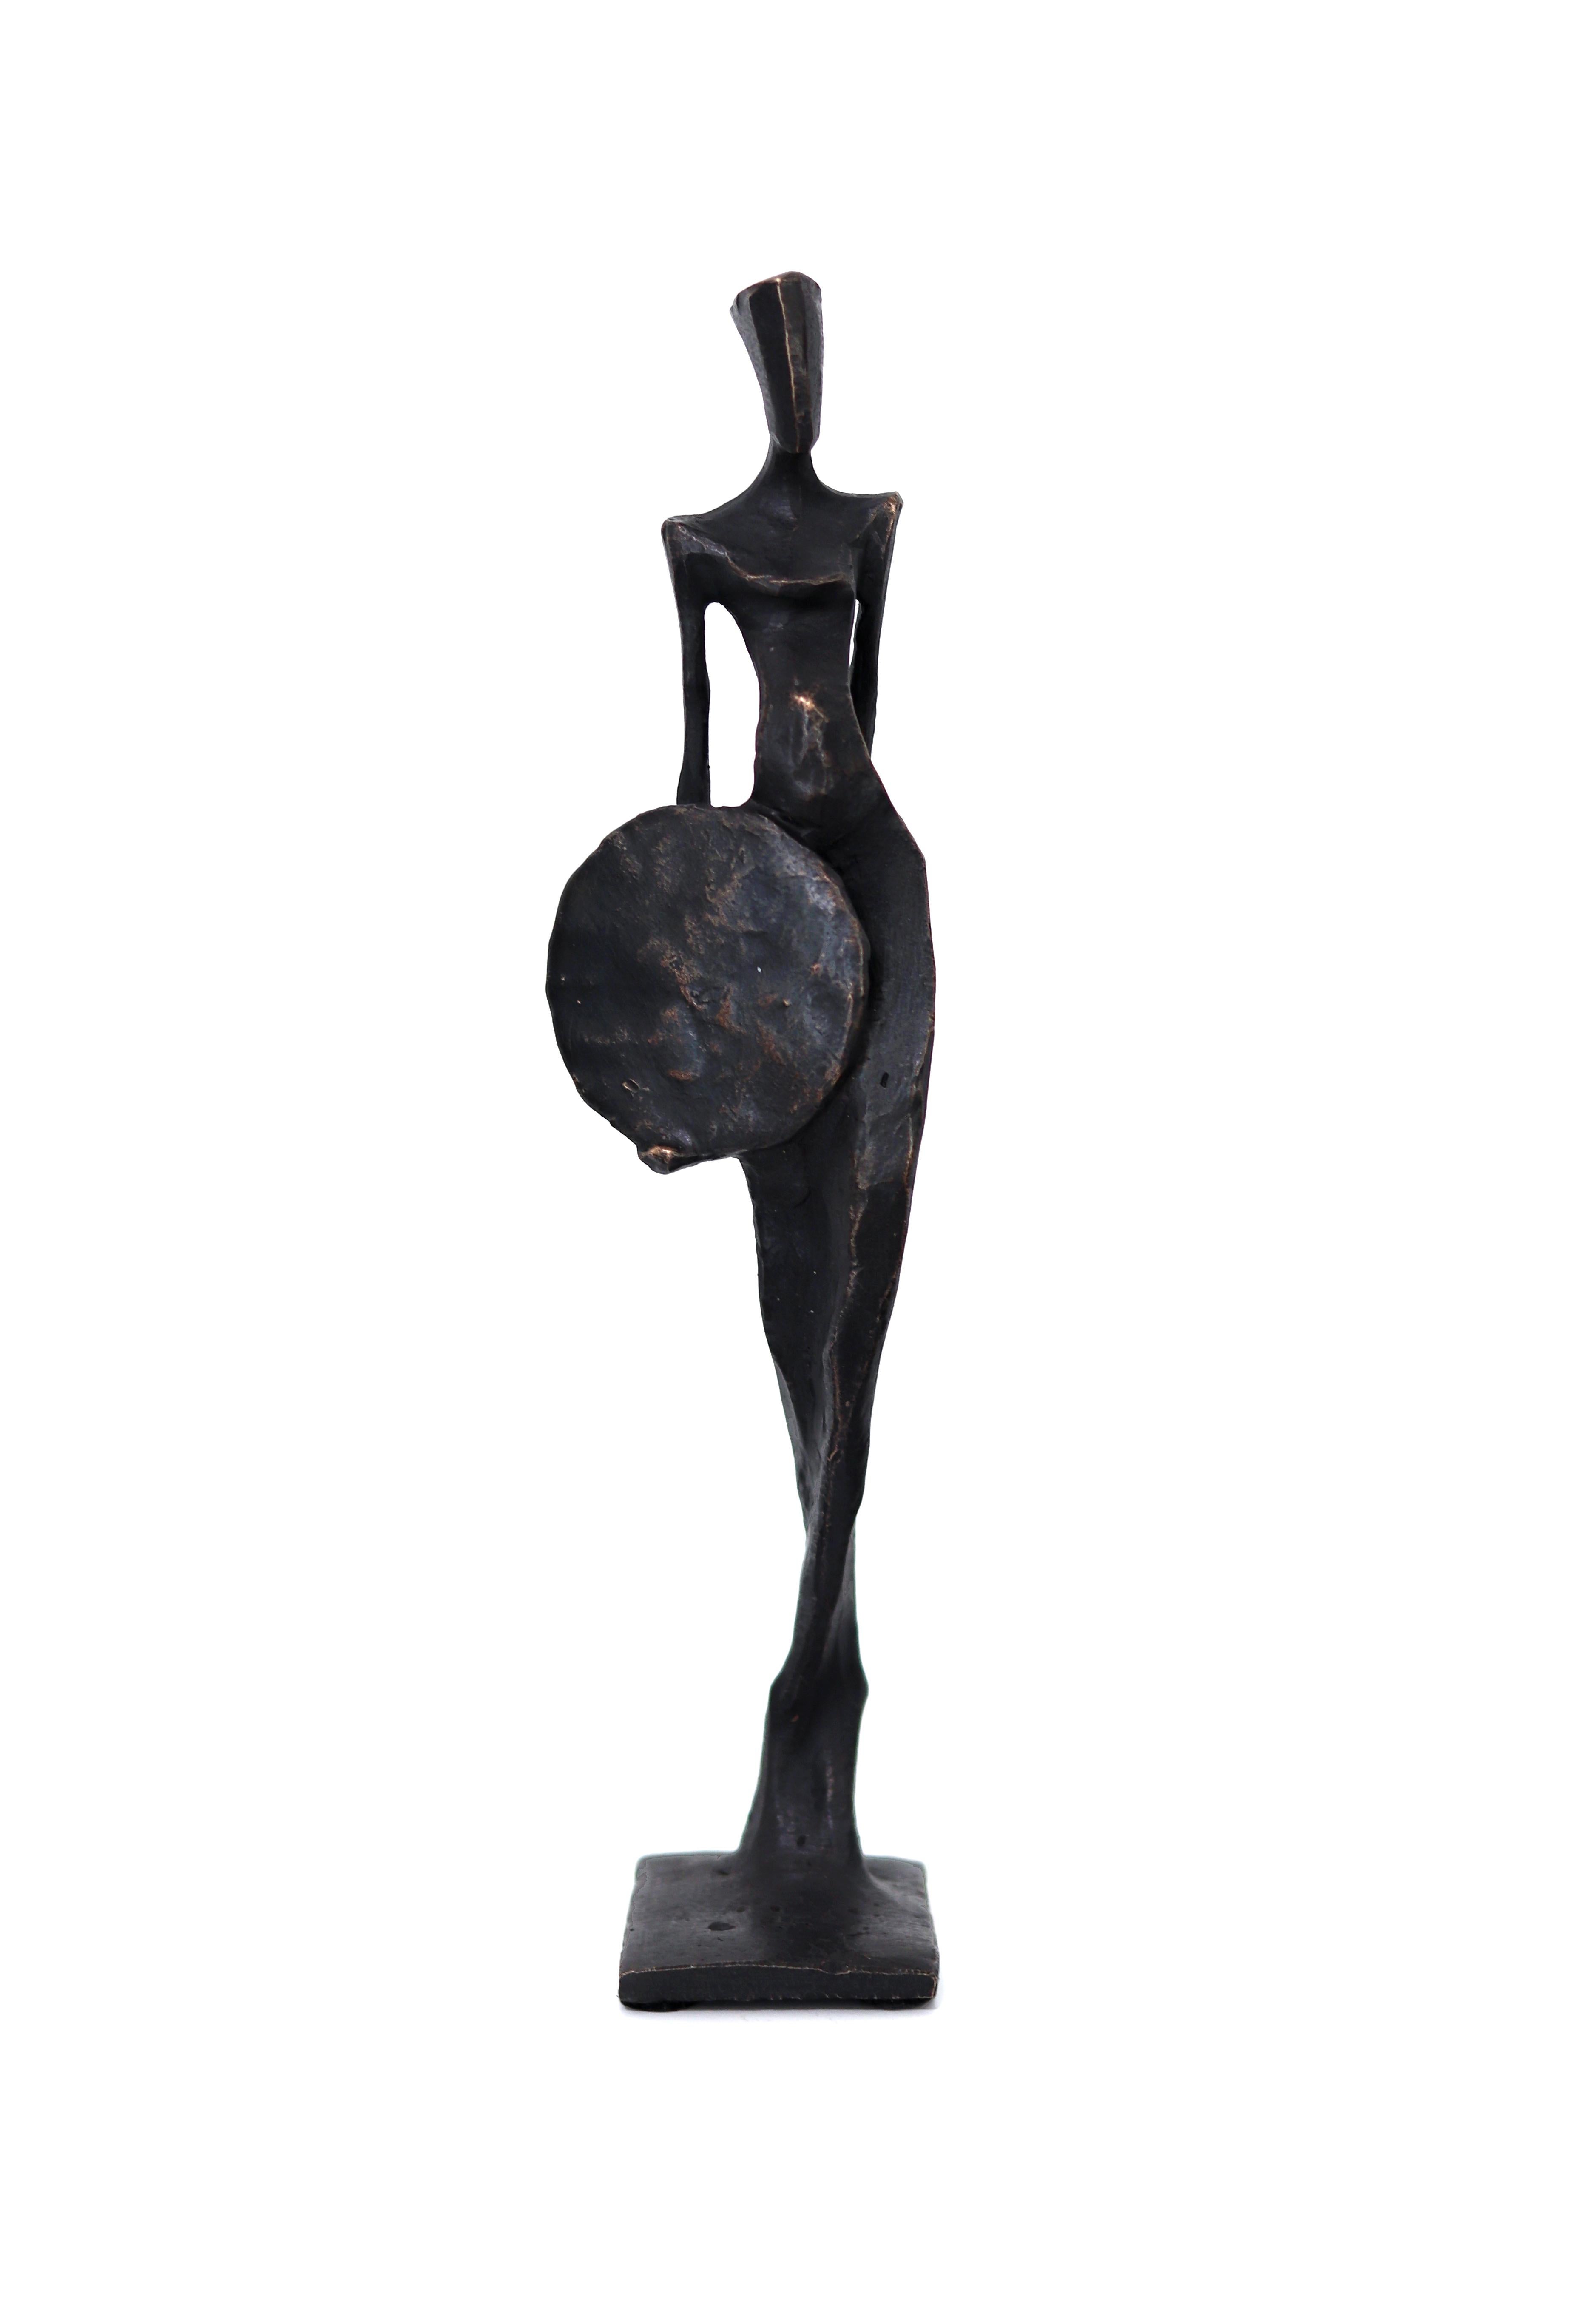 Hera  - Graceful Modern Figurative Bronze Sculpture - Original Art and Design 